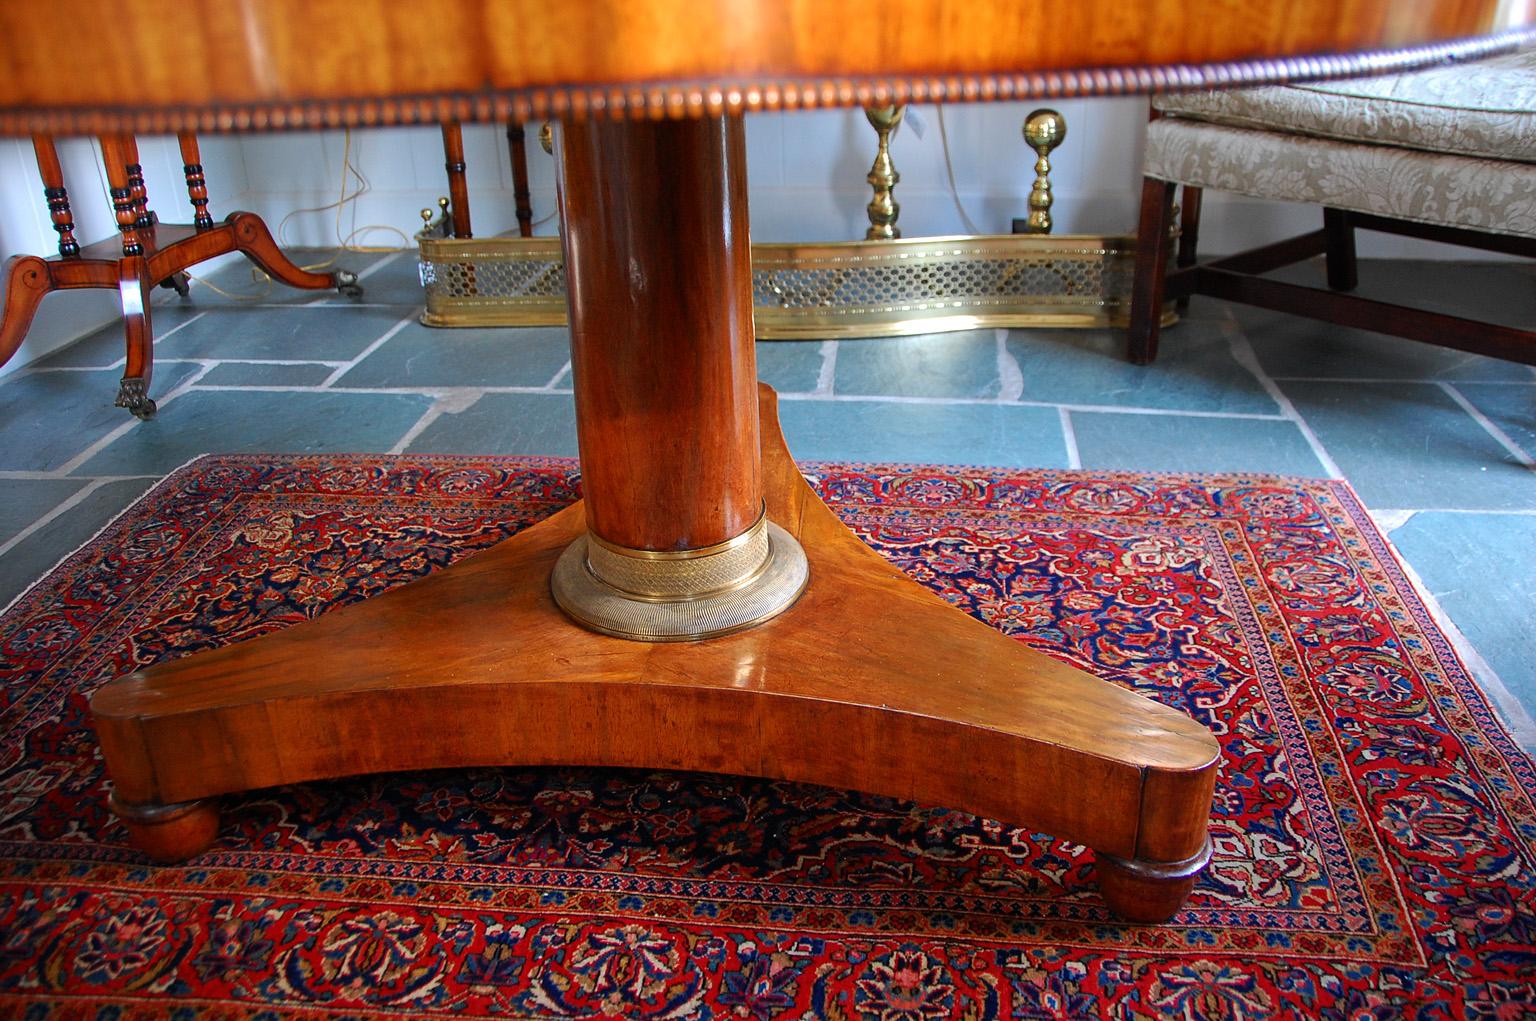 19th Century English Regency Period Center Table in Zebra Wood Four Foot Diameter